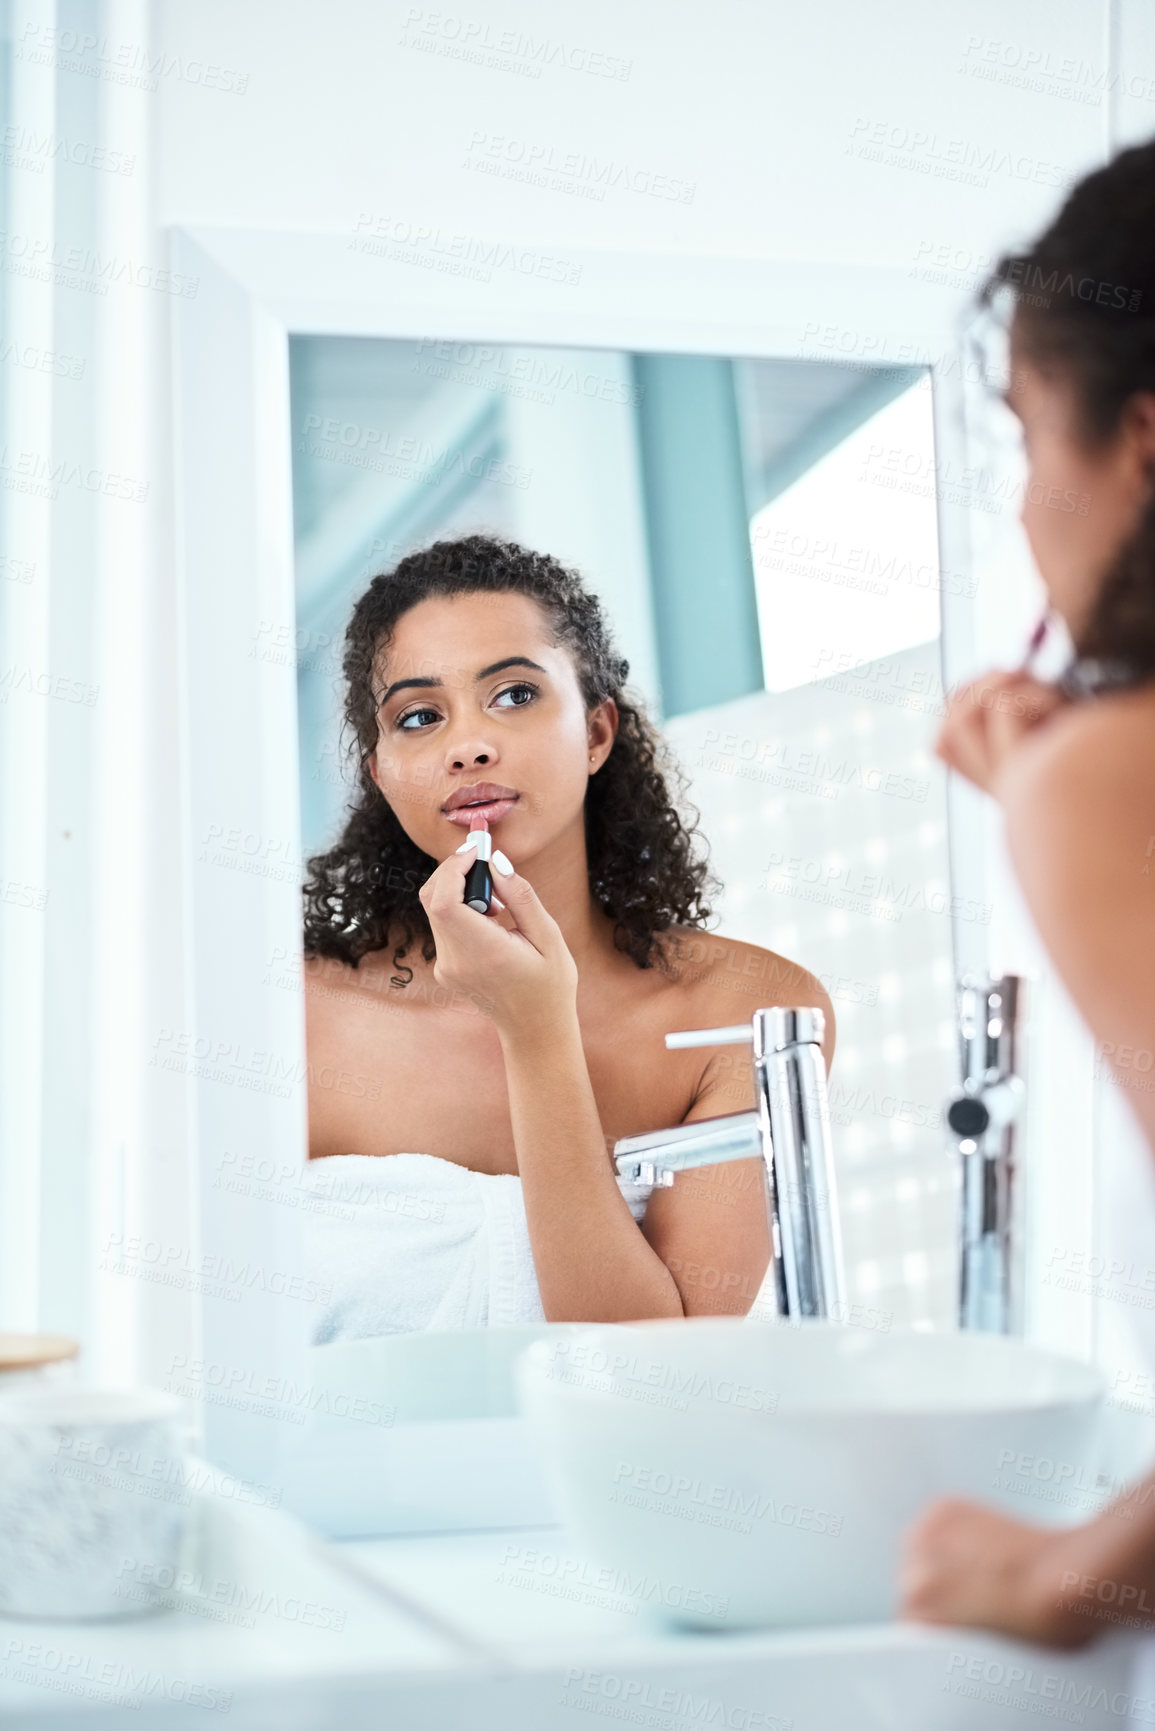 Buy stock photo Shot of a beautiful woman applying lipstick in her bathroom mirror